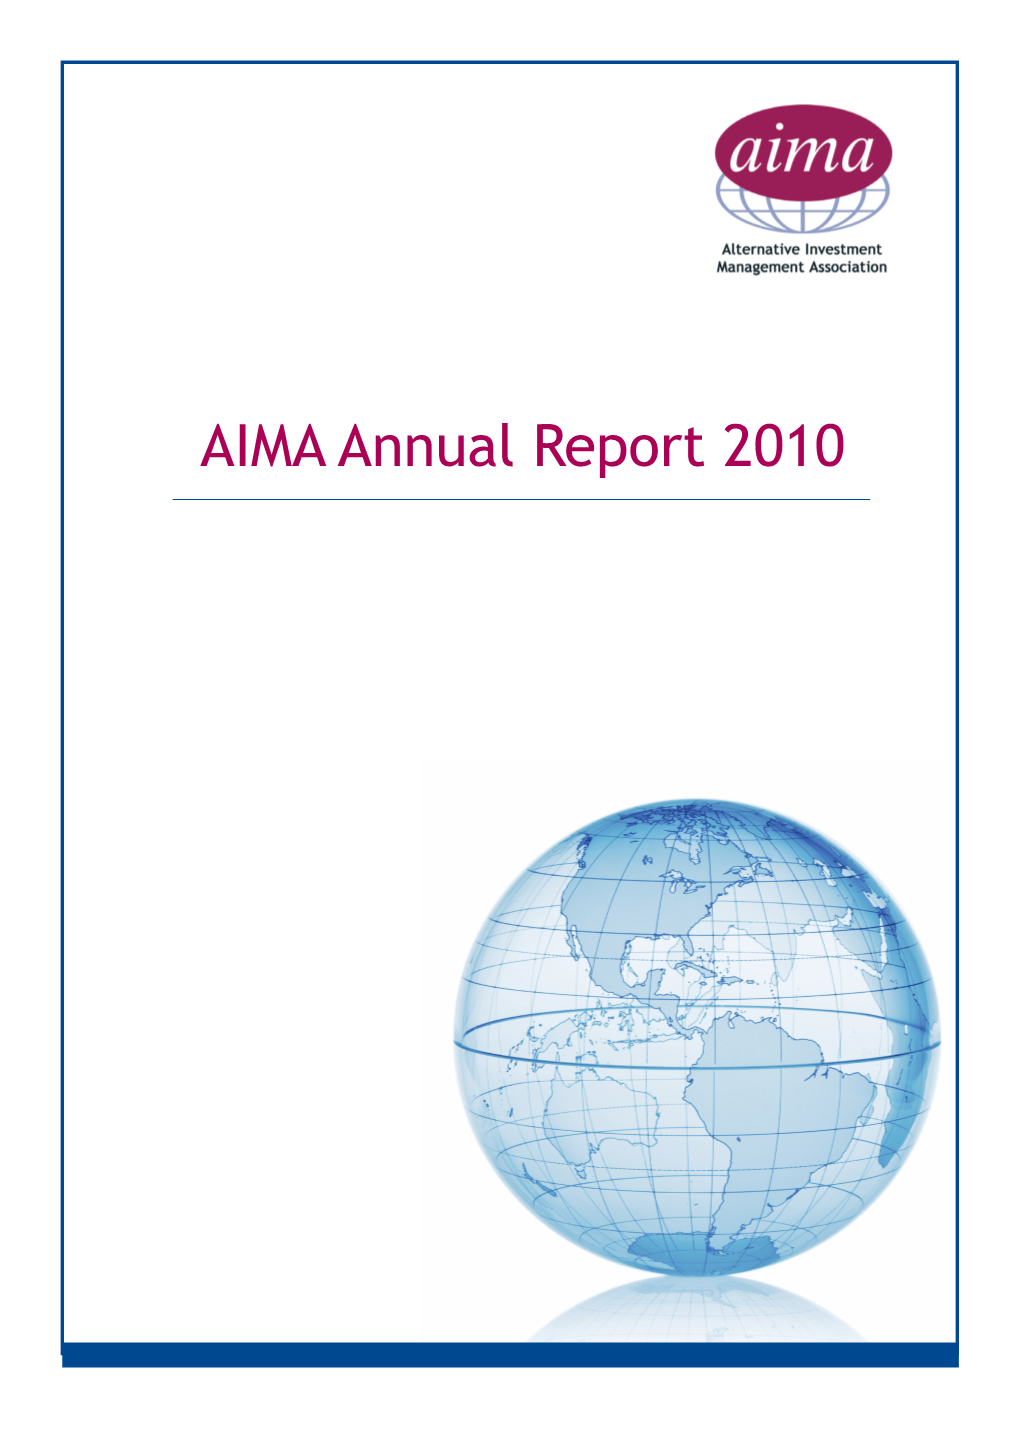 AIMA Annual Report 2010 Chairman’S Statement